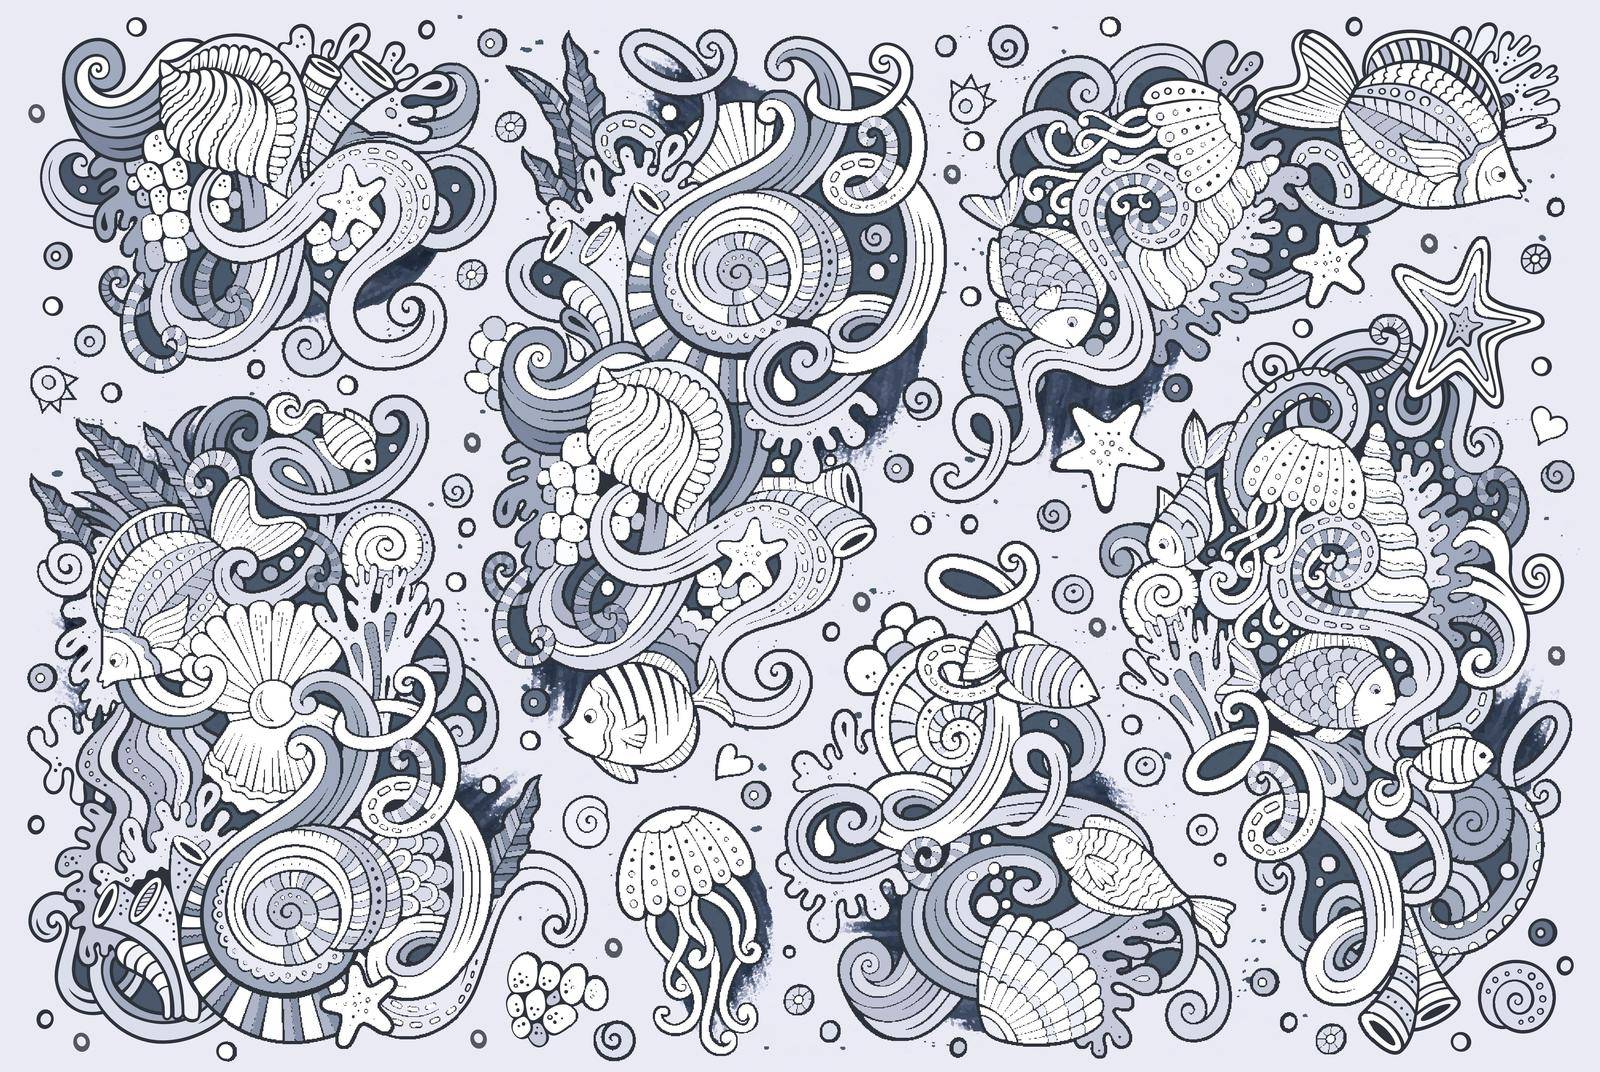 Line art set of marine life objects by balabolka